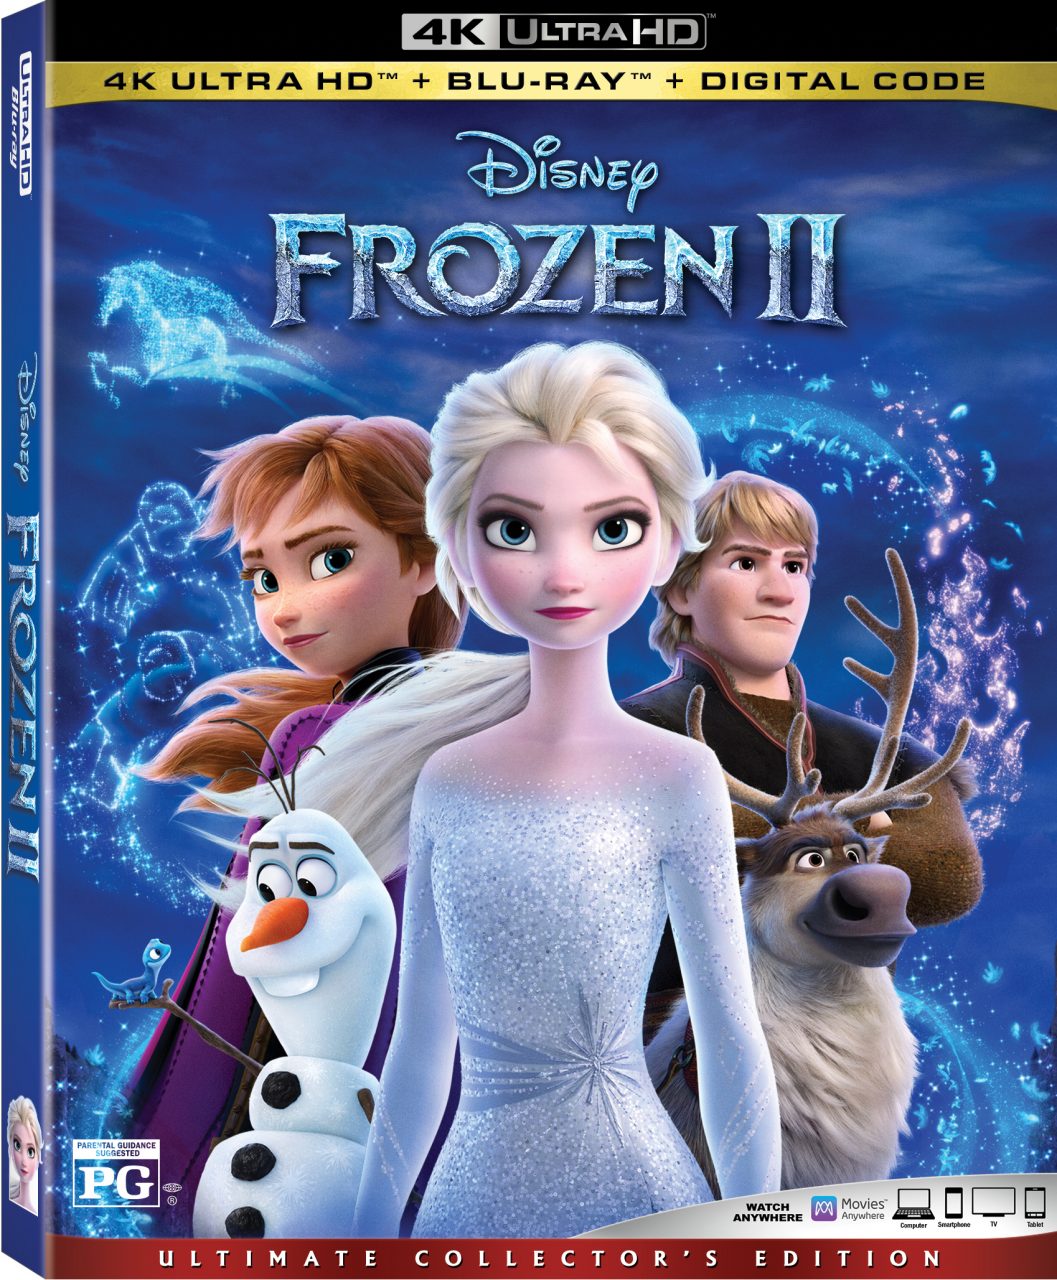 Frozen 2 4K Ultra HD Combo Pack cover (Walt Disney Studios Home Entertainment)